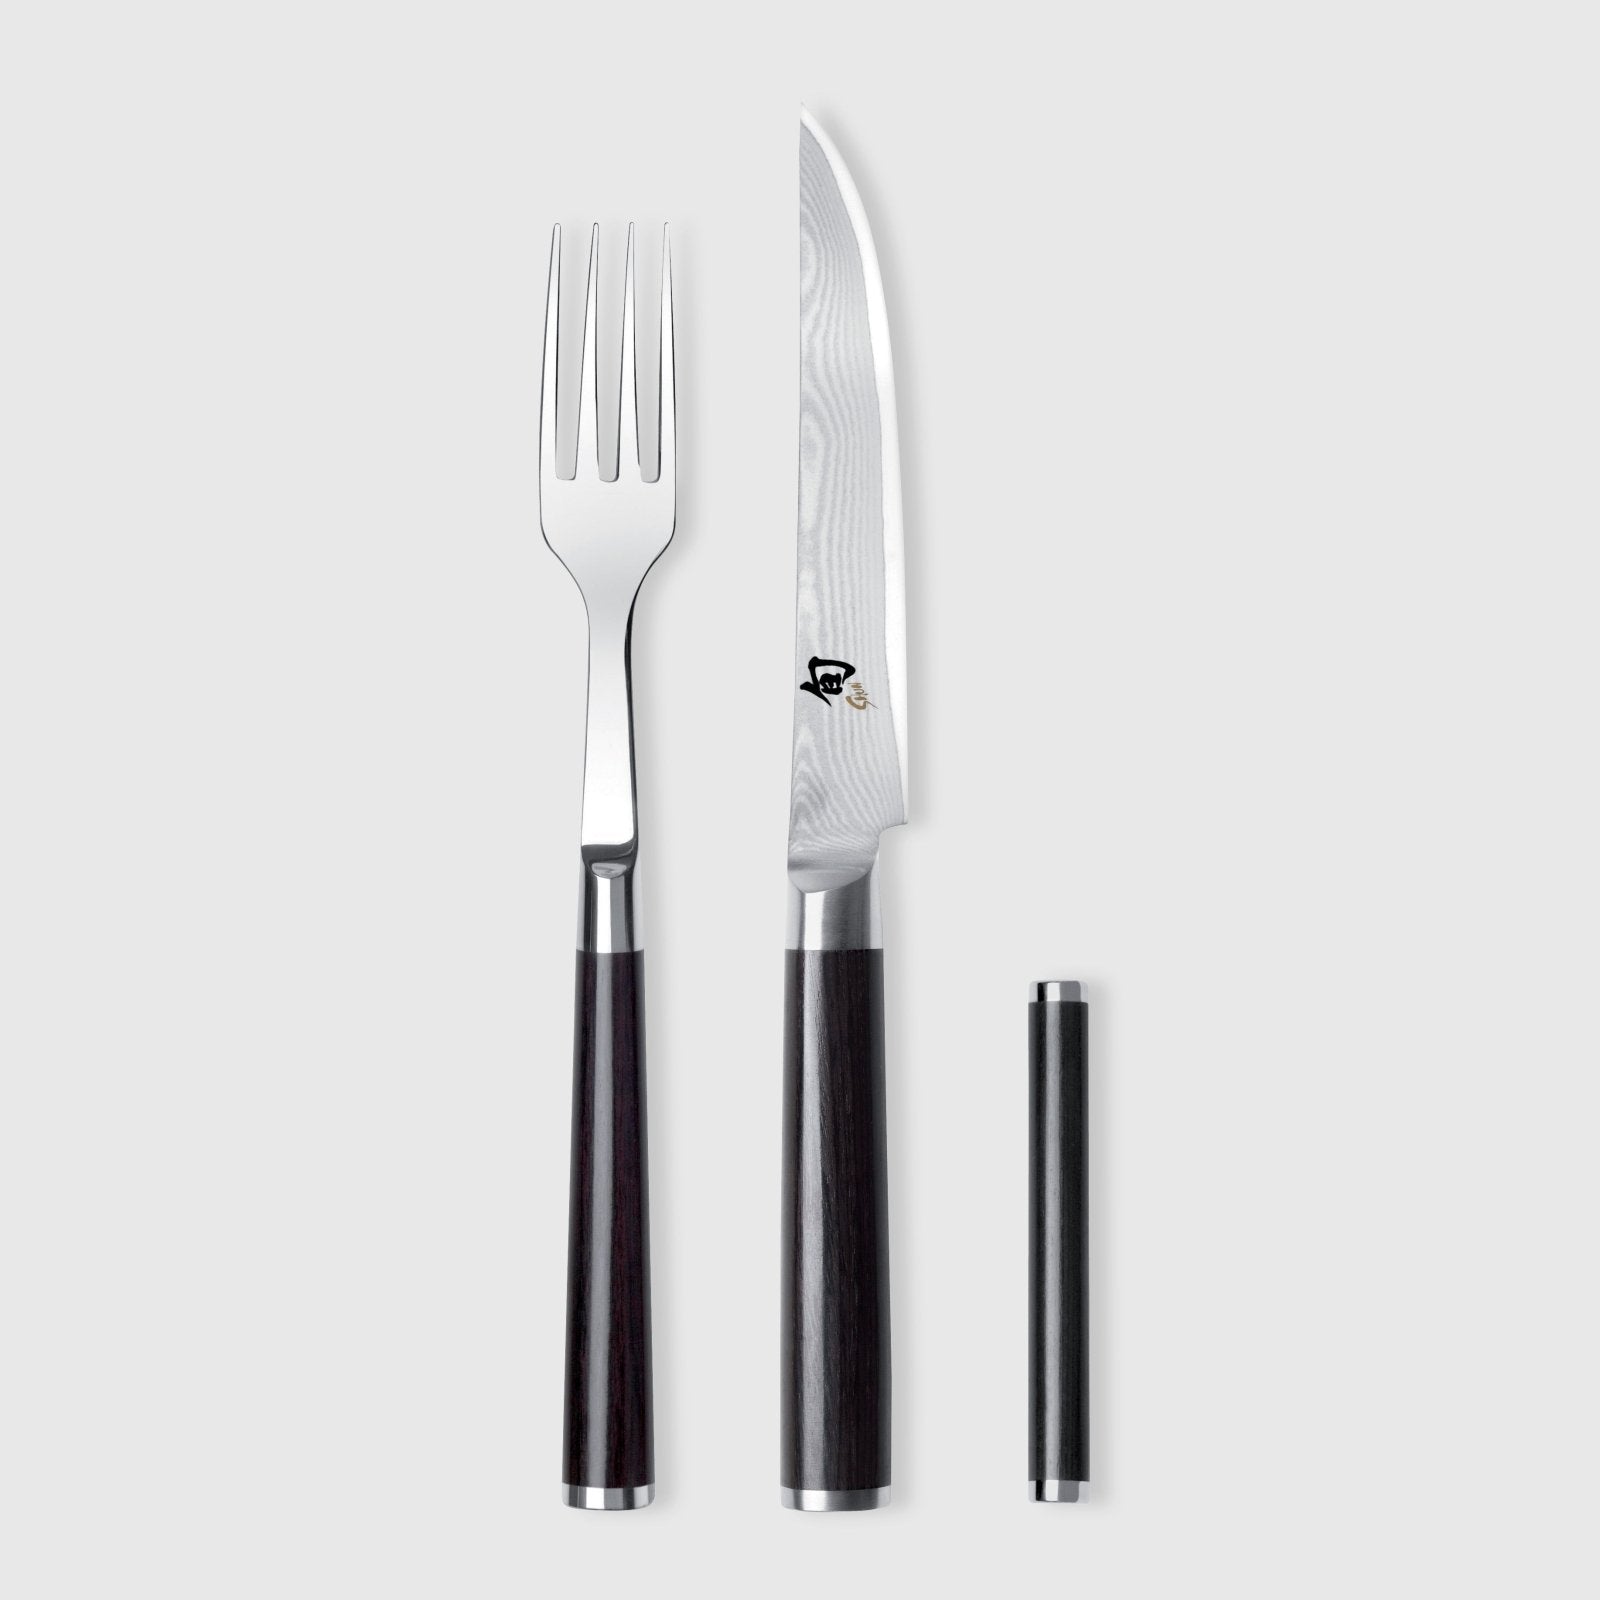 KAI Shun Cutlery Set - Knife, Fork & Knife Rest - KAI-DM-0907 - The Cotswold Knife Company